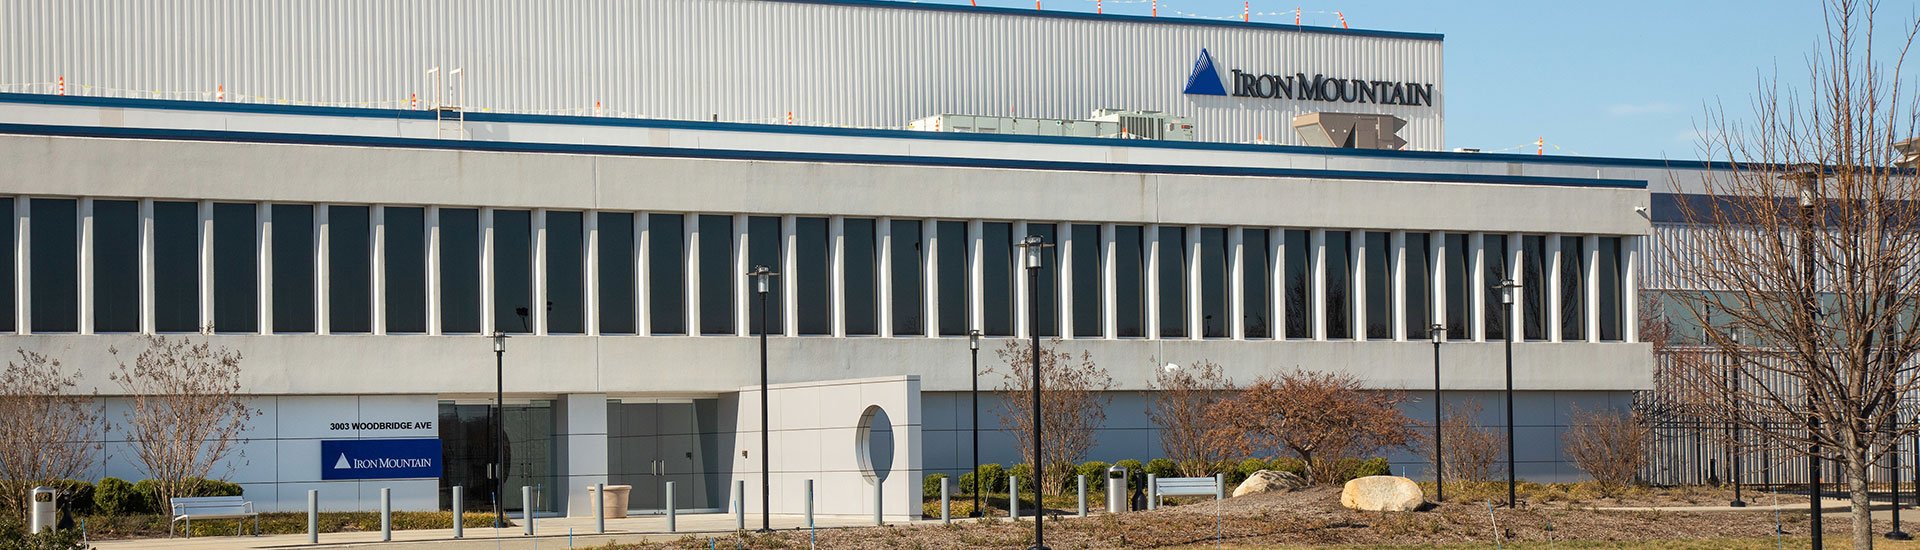 New Jersey data center entrance